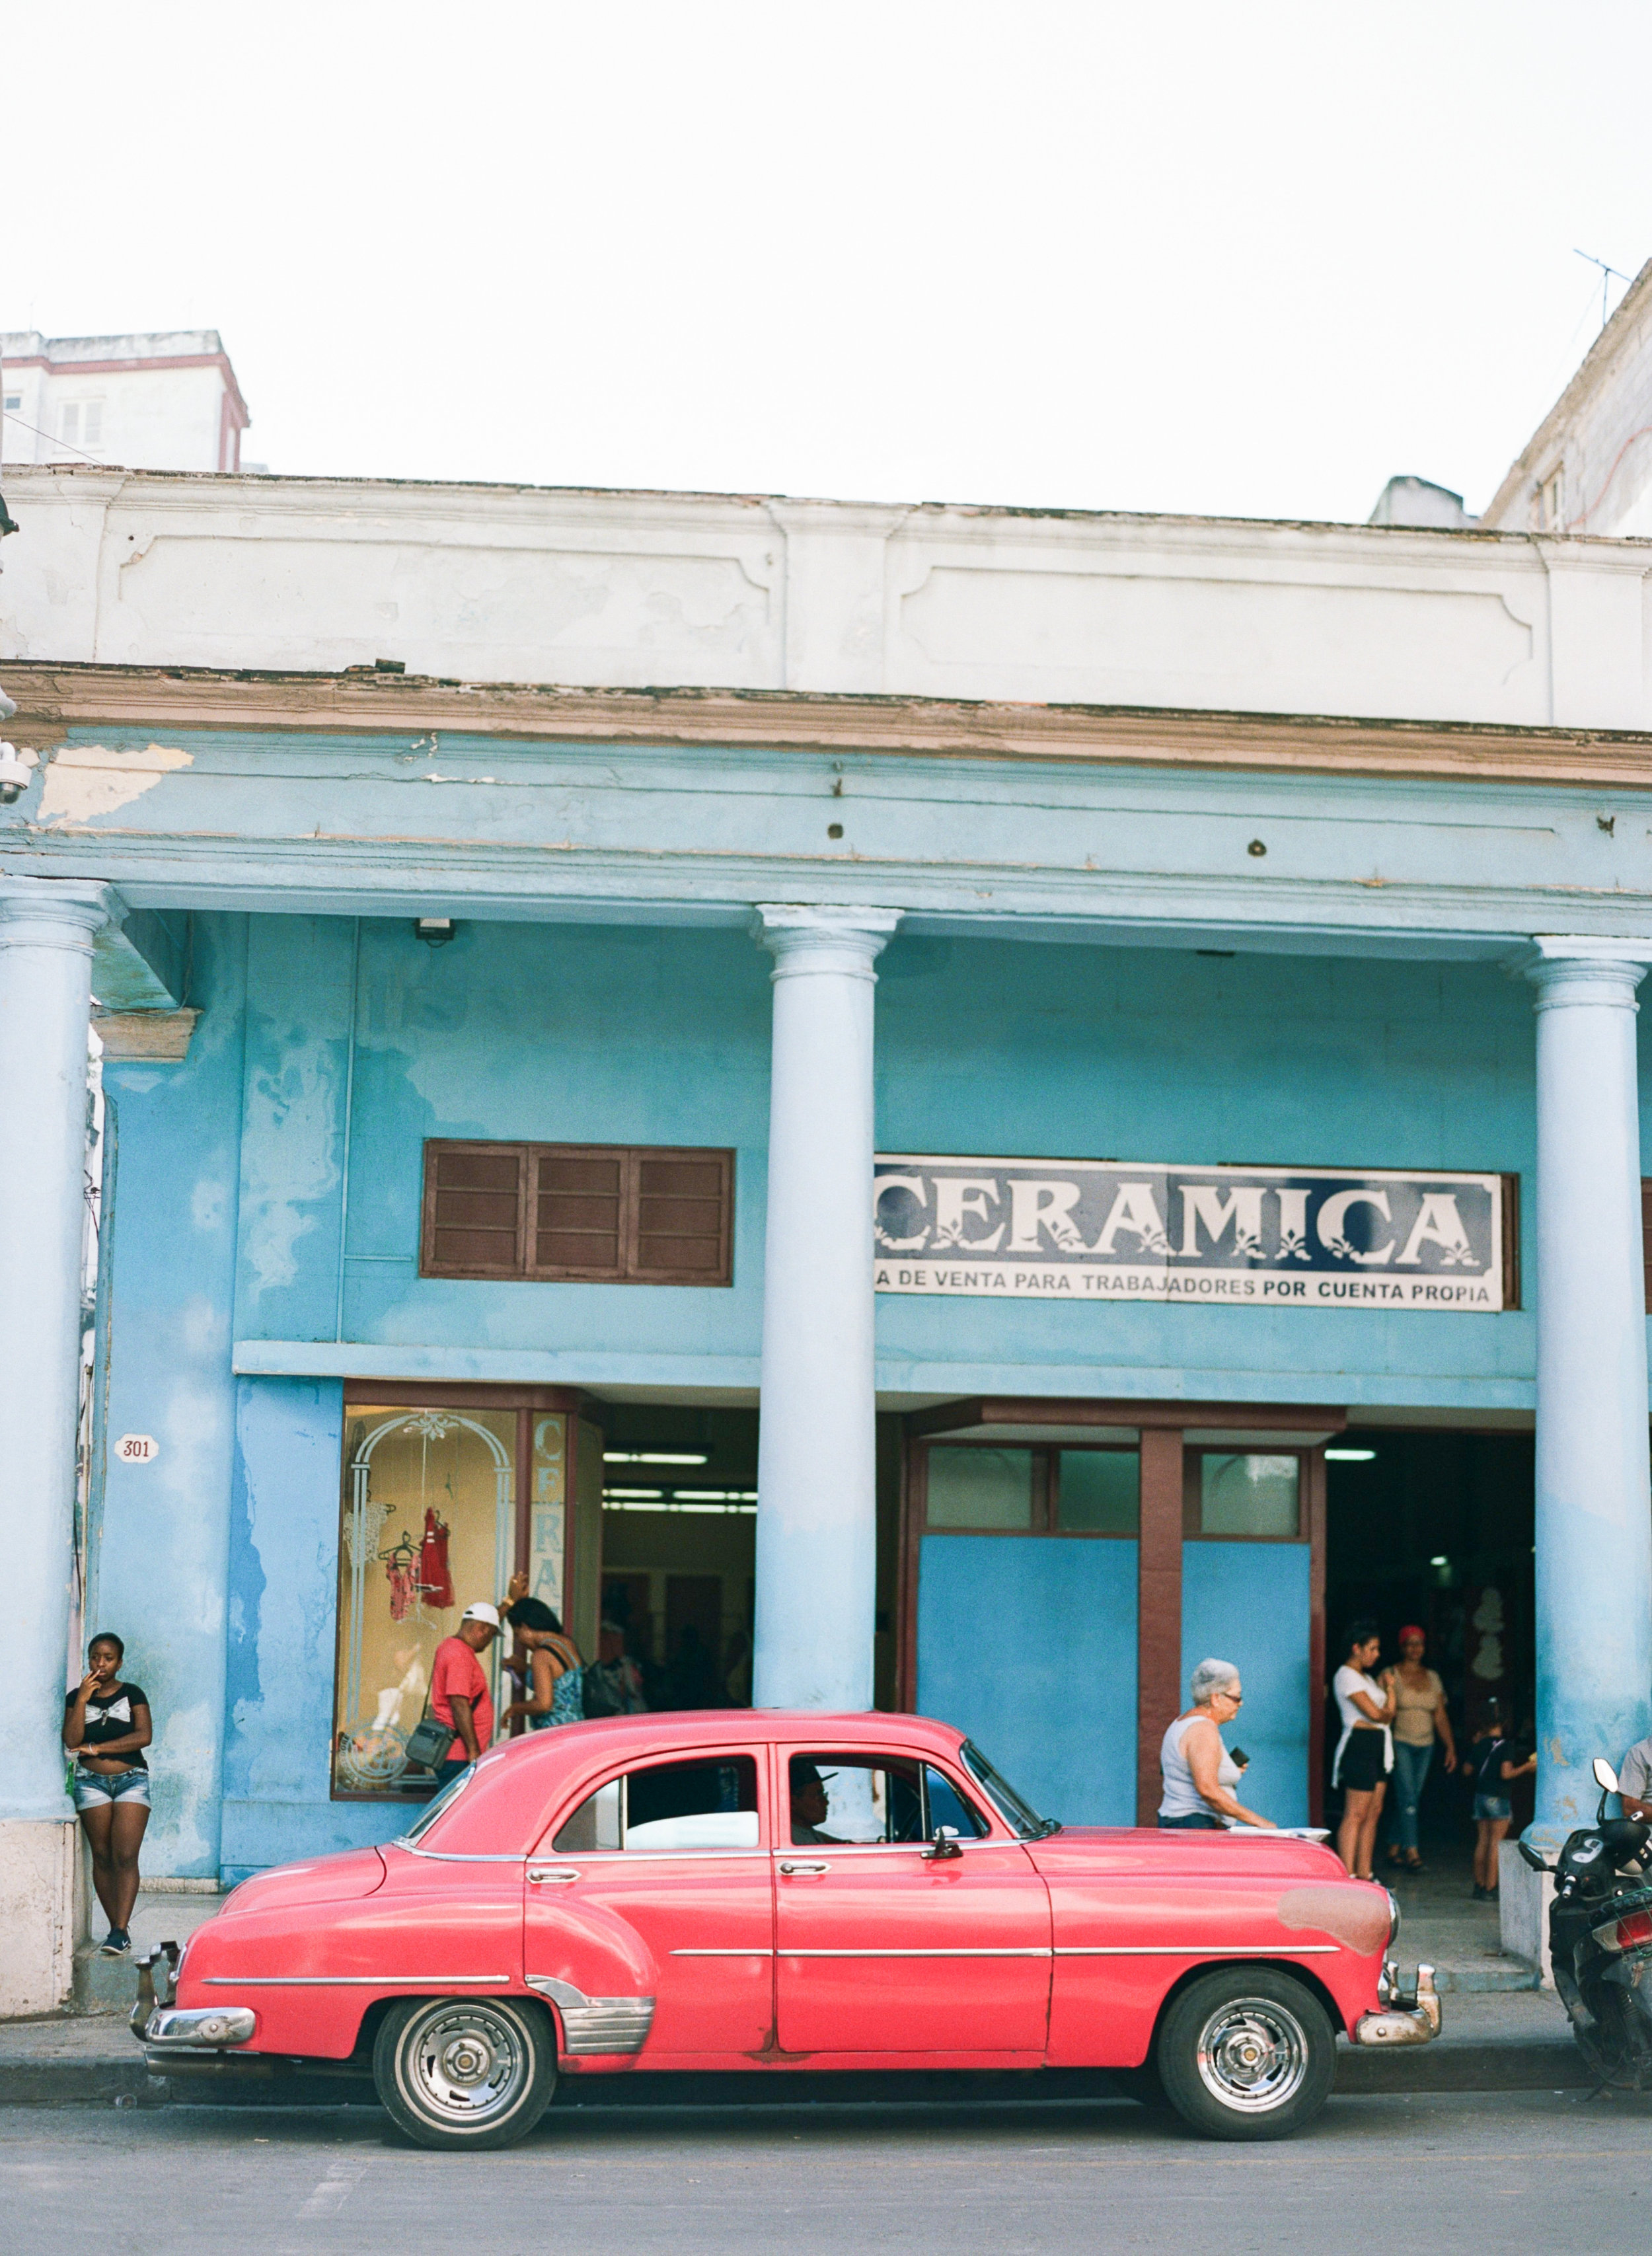 Cuba-Travel-photography-rachael-mcitnosh-photography-1.jpg